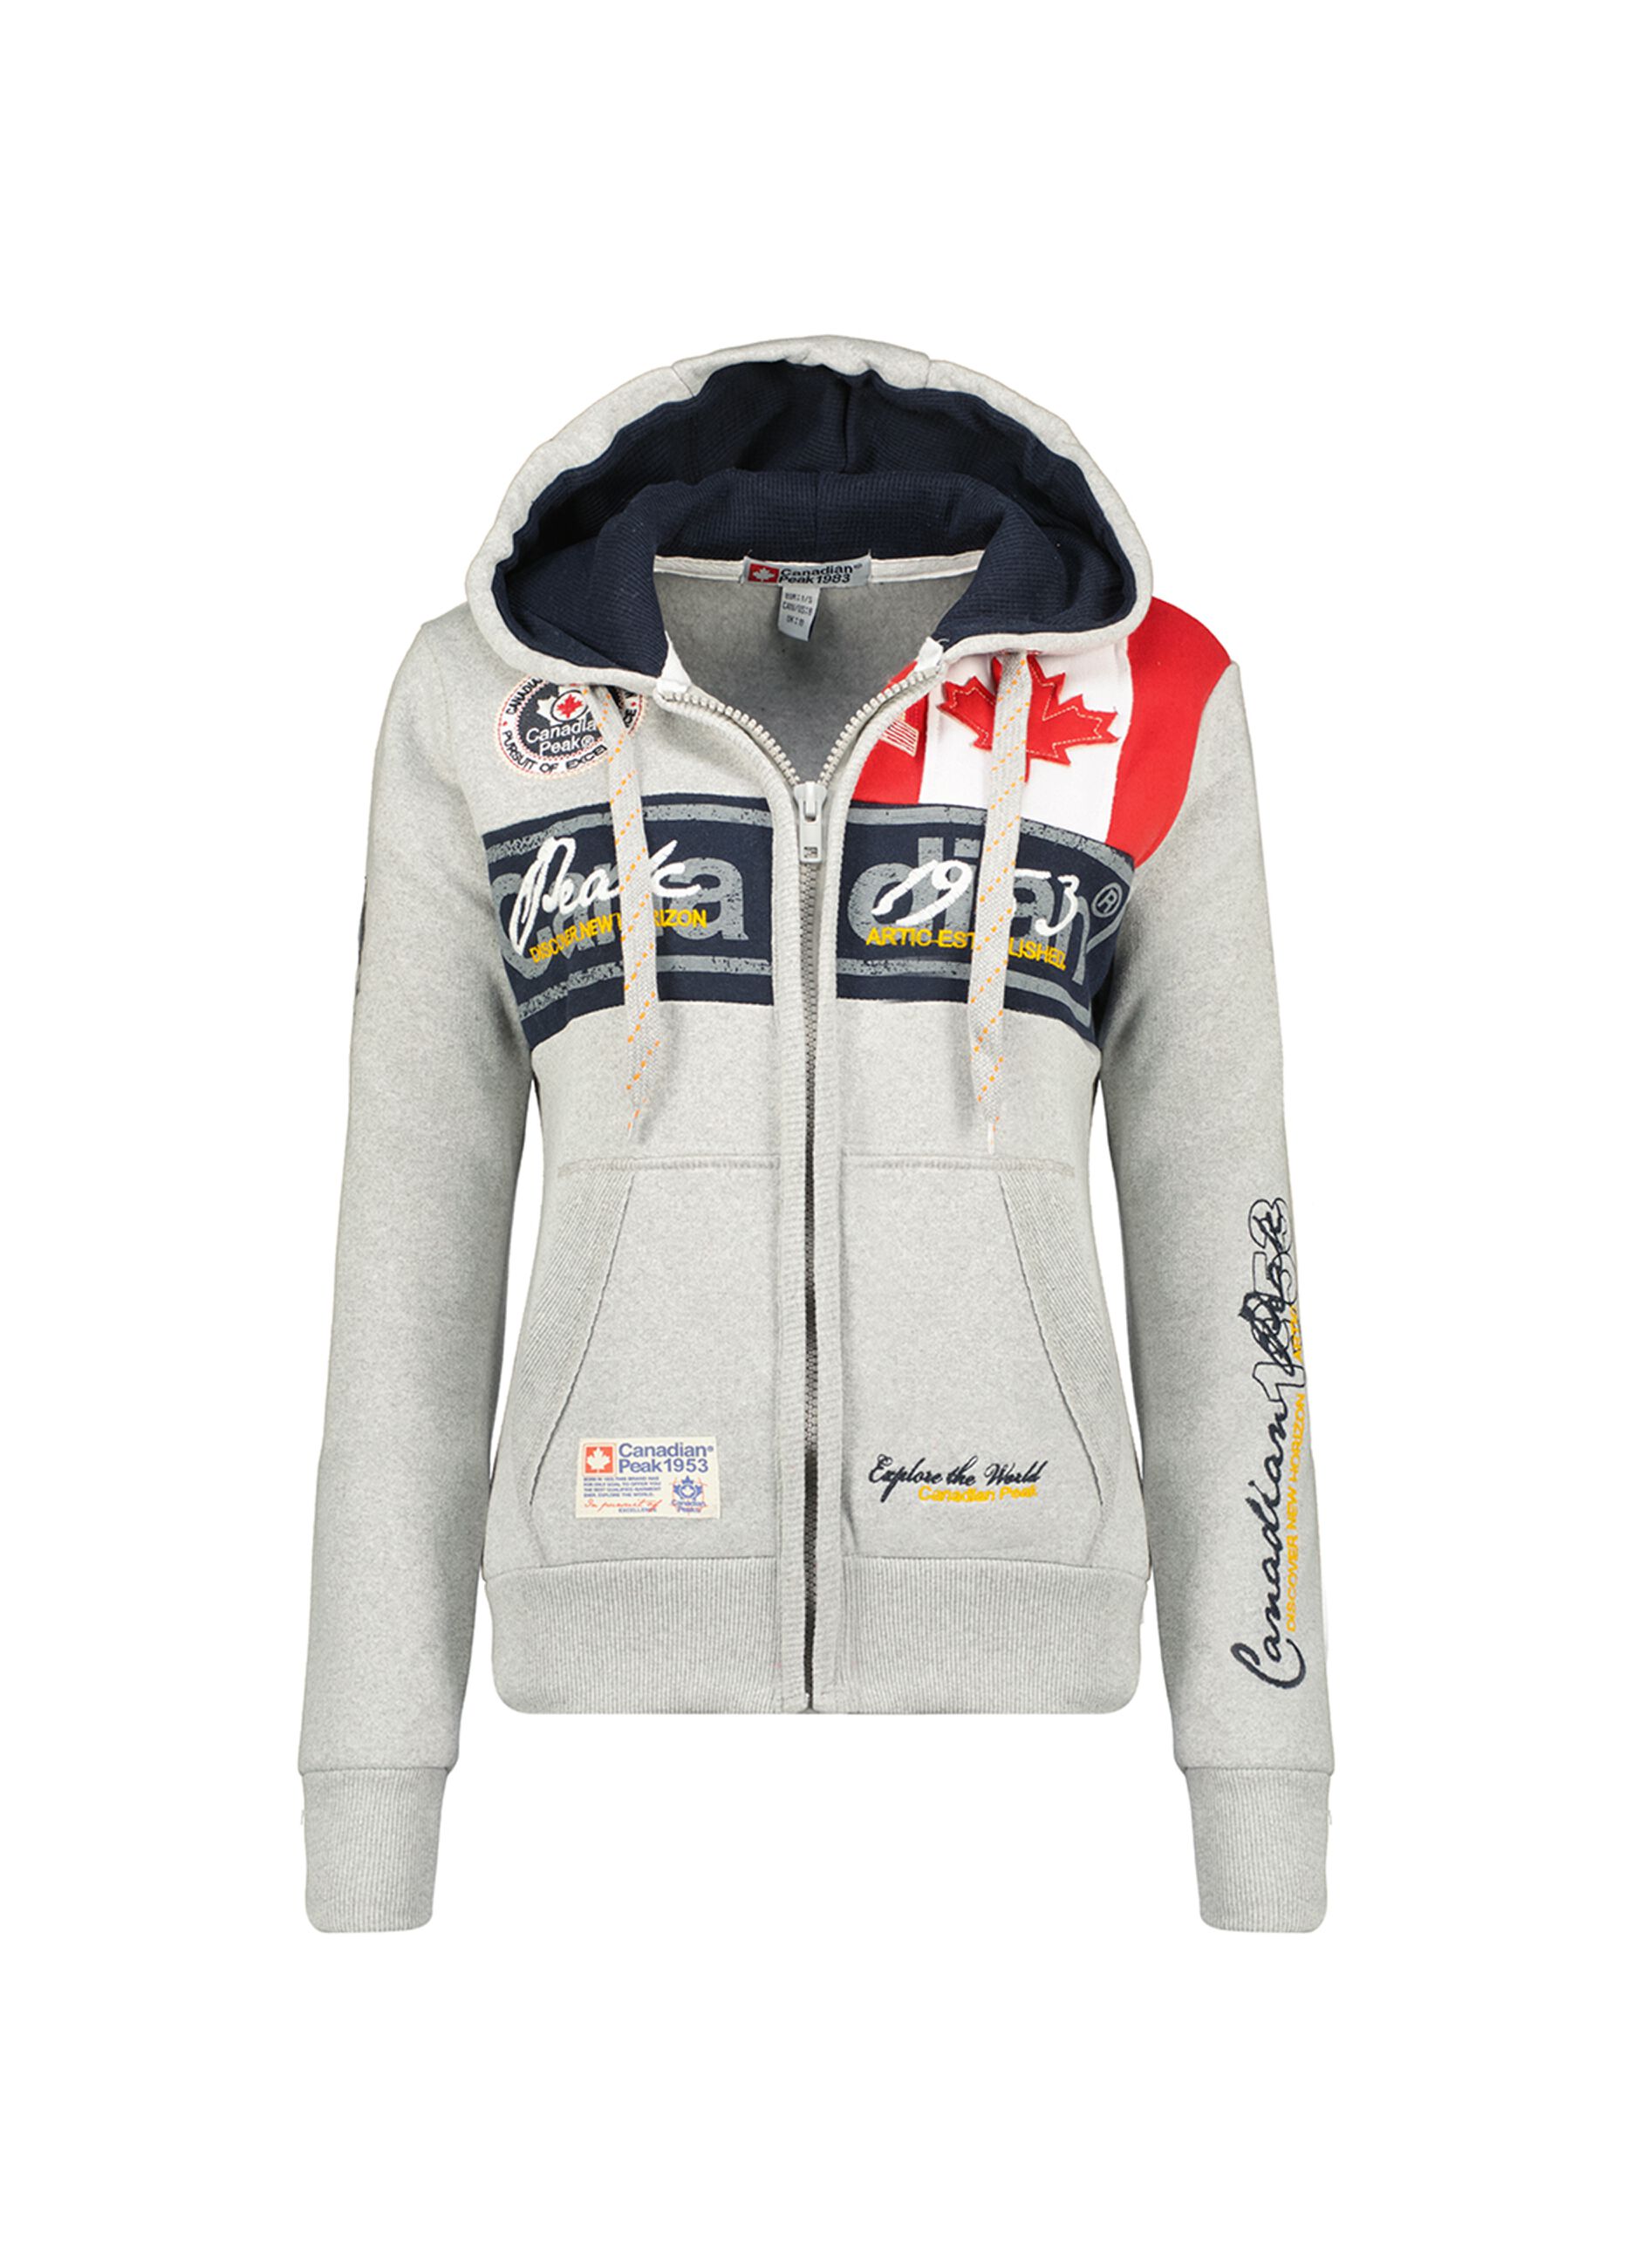 Full-zip with hood and Canadian Peak print